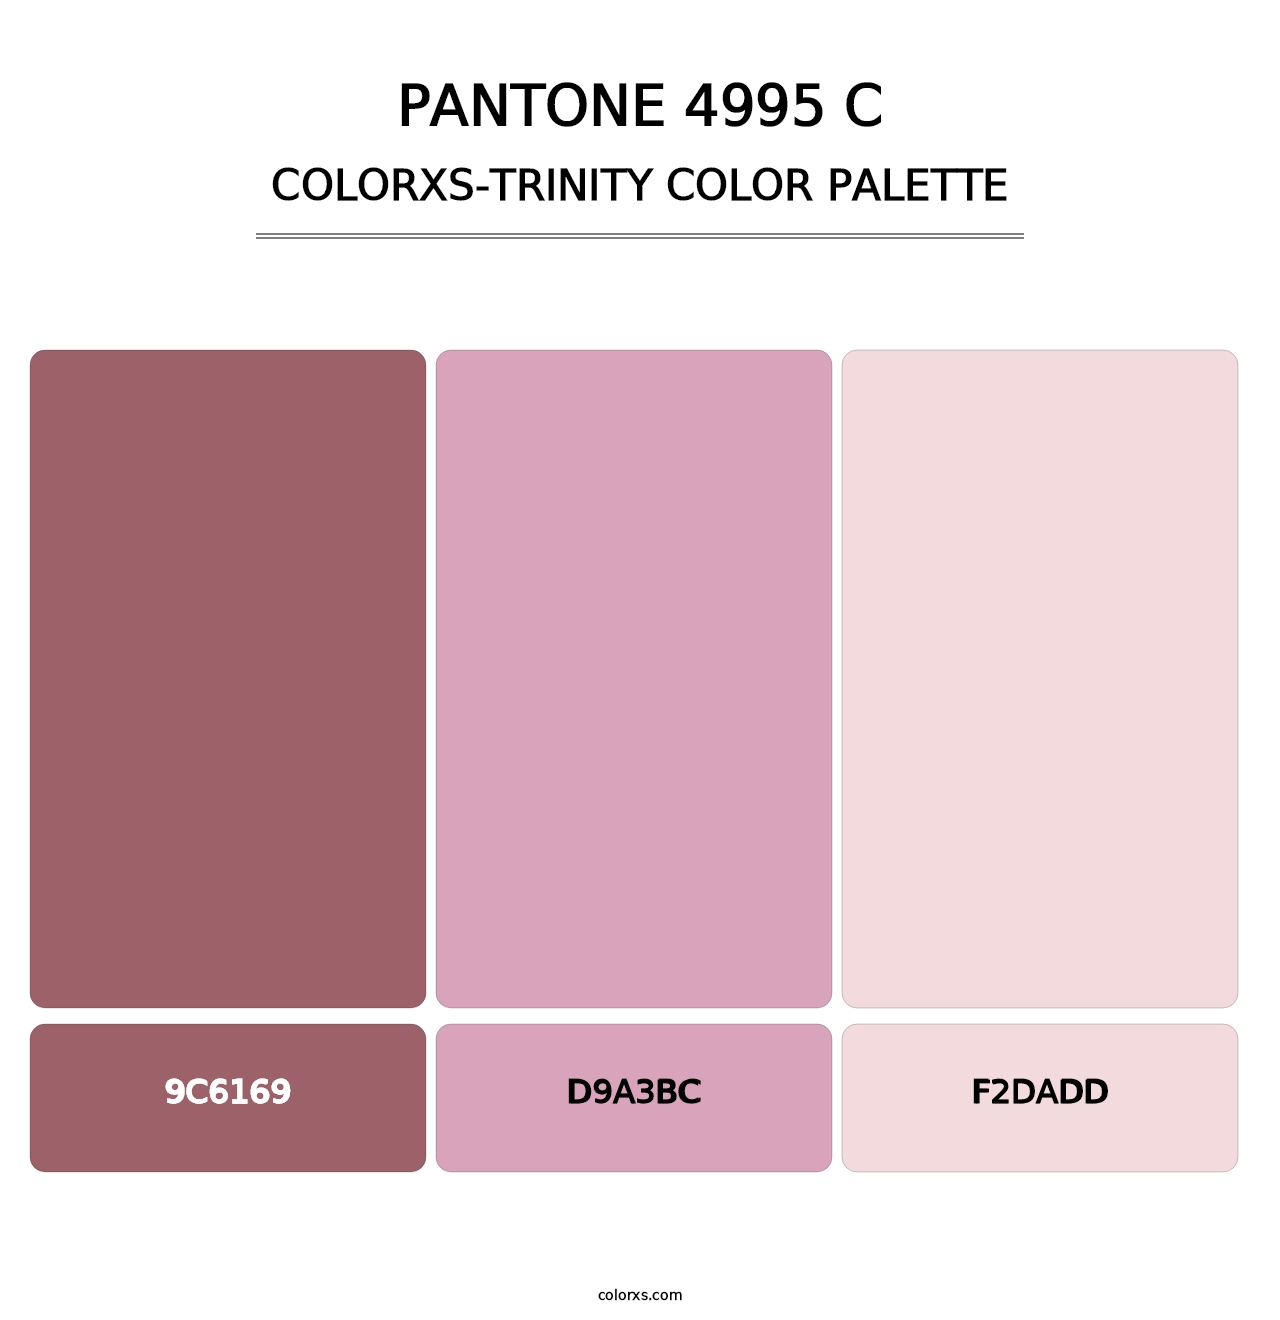 PANTONE 4995 C - Colorxs Trinity Palette